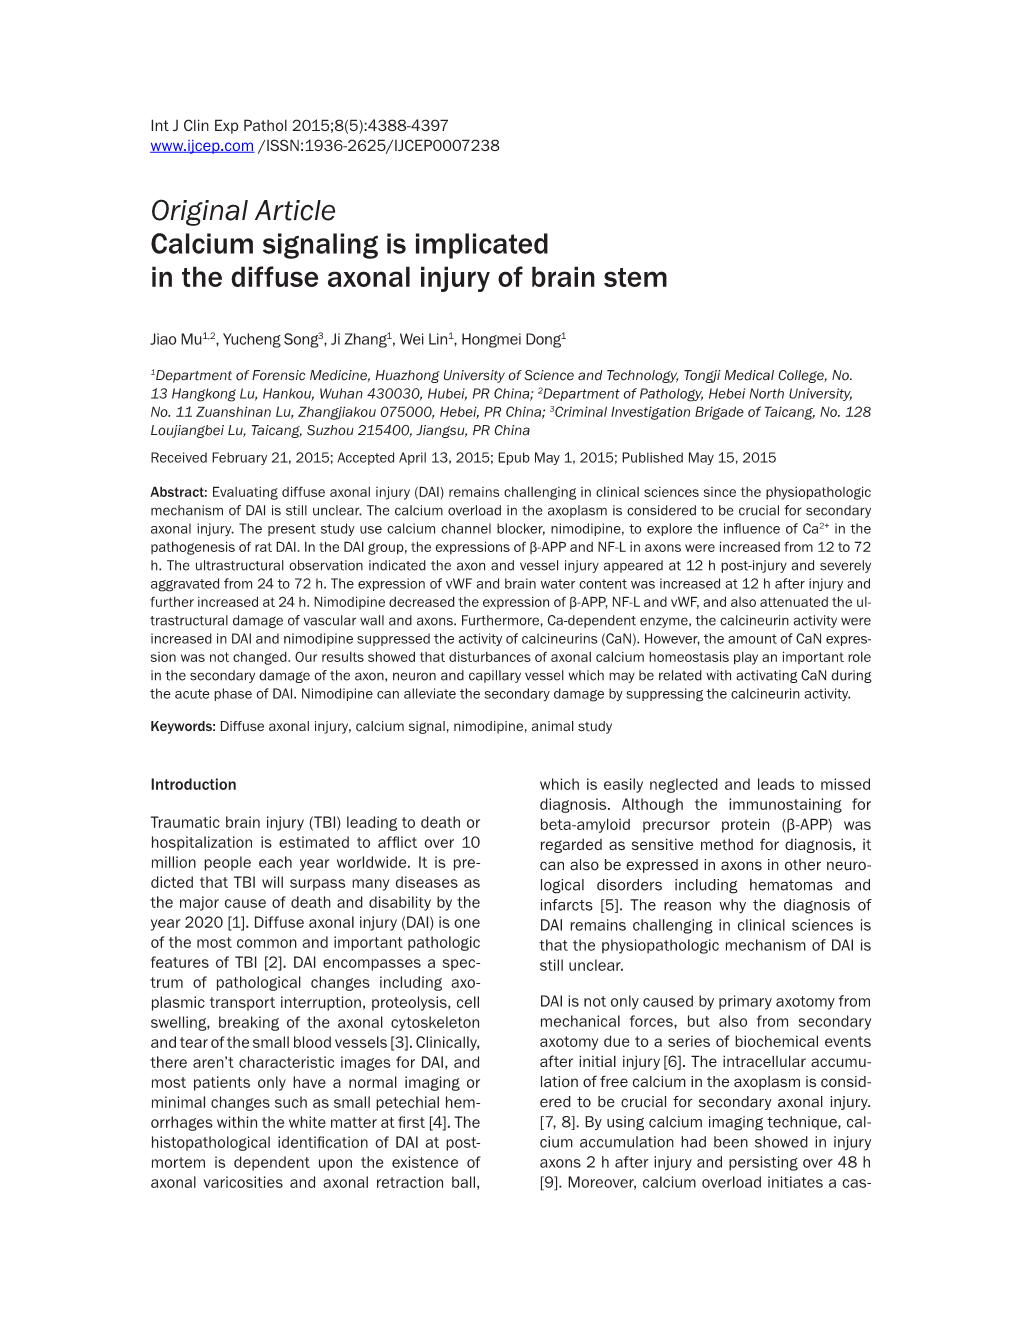 Original Article Calcium Signaling Is Implicated in the Diffuse Axonal Injury of Brain Stem